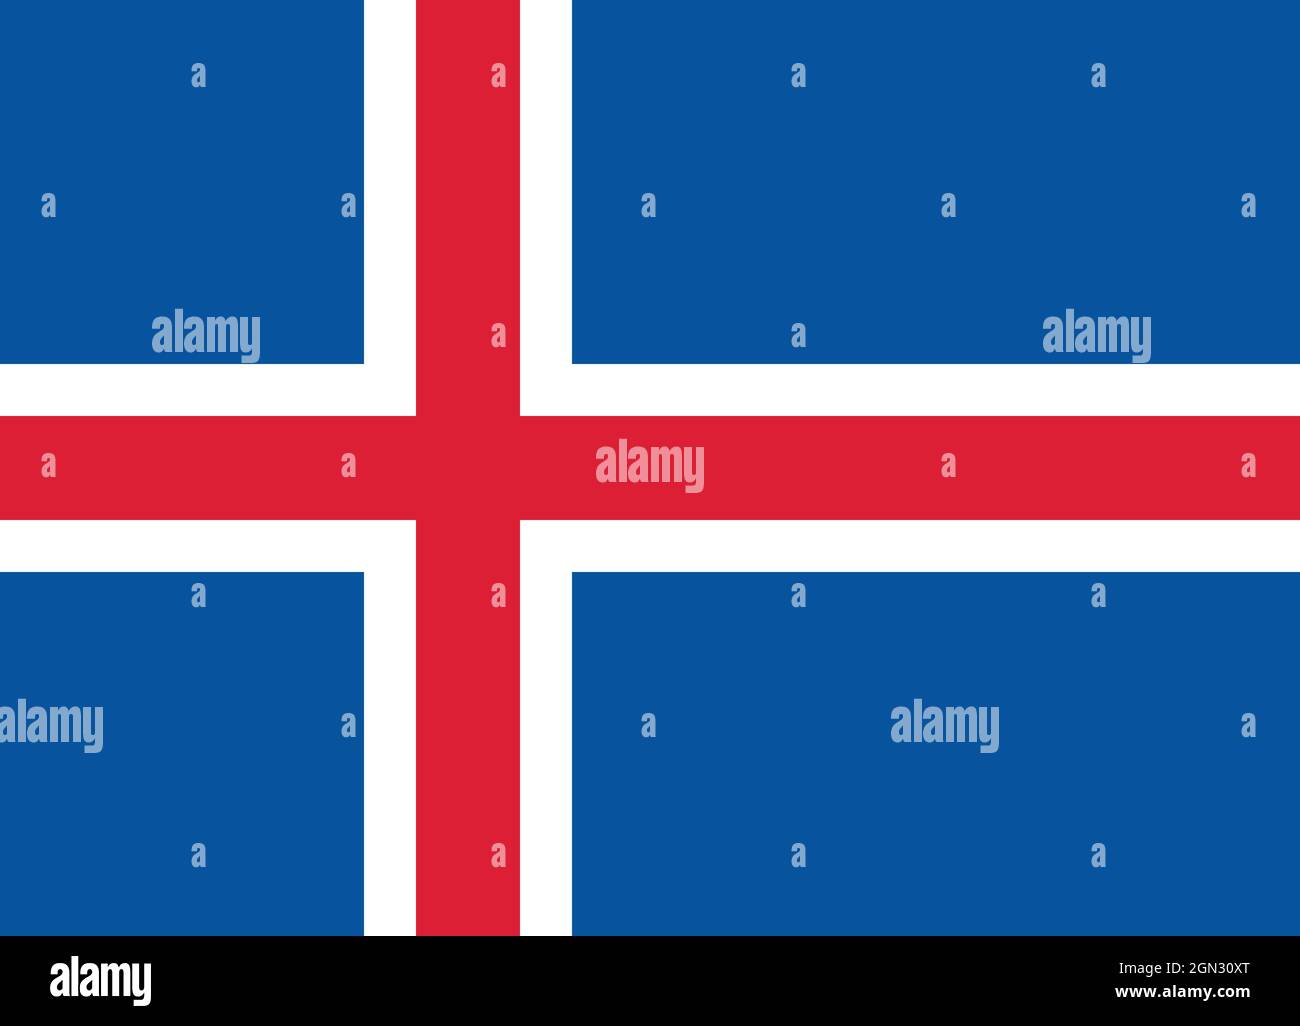 National flag of Iceland original size and colors vector illustration, islenski faninn or National Flag of Icelanders, Iceland flag Stock Vector